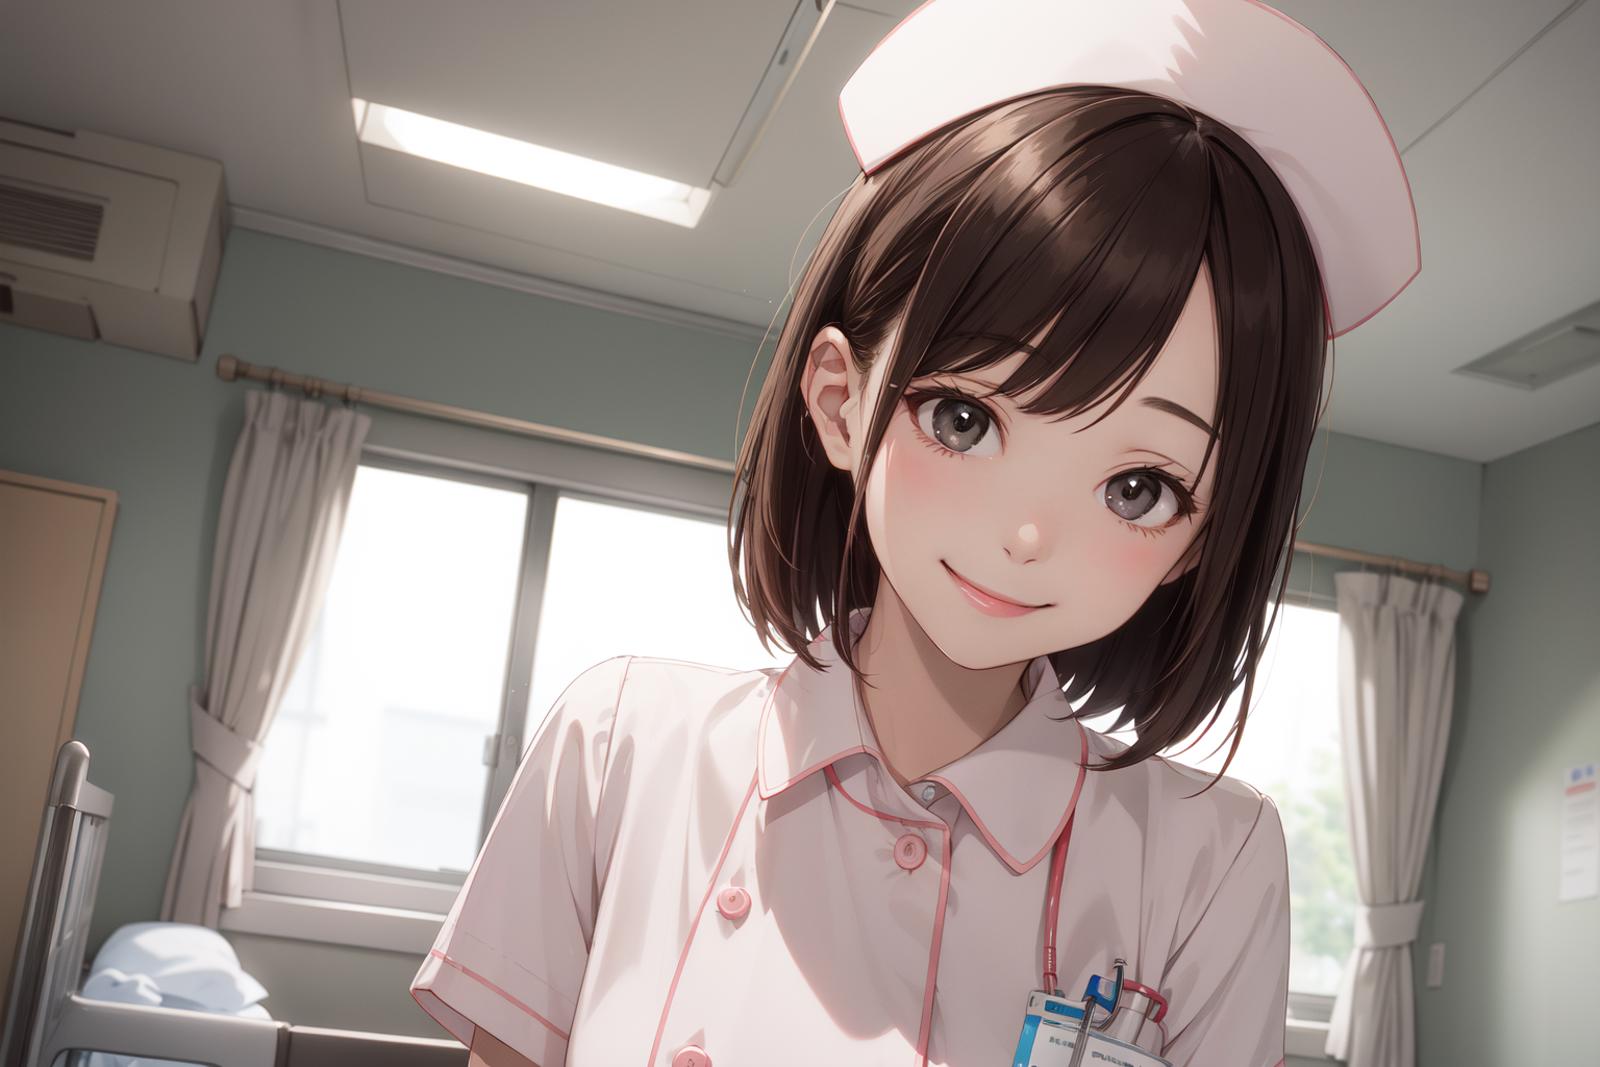 Nurse uniform, One-piece, Japanese style image by phageoussurgery439